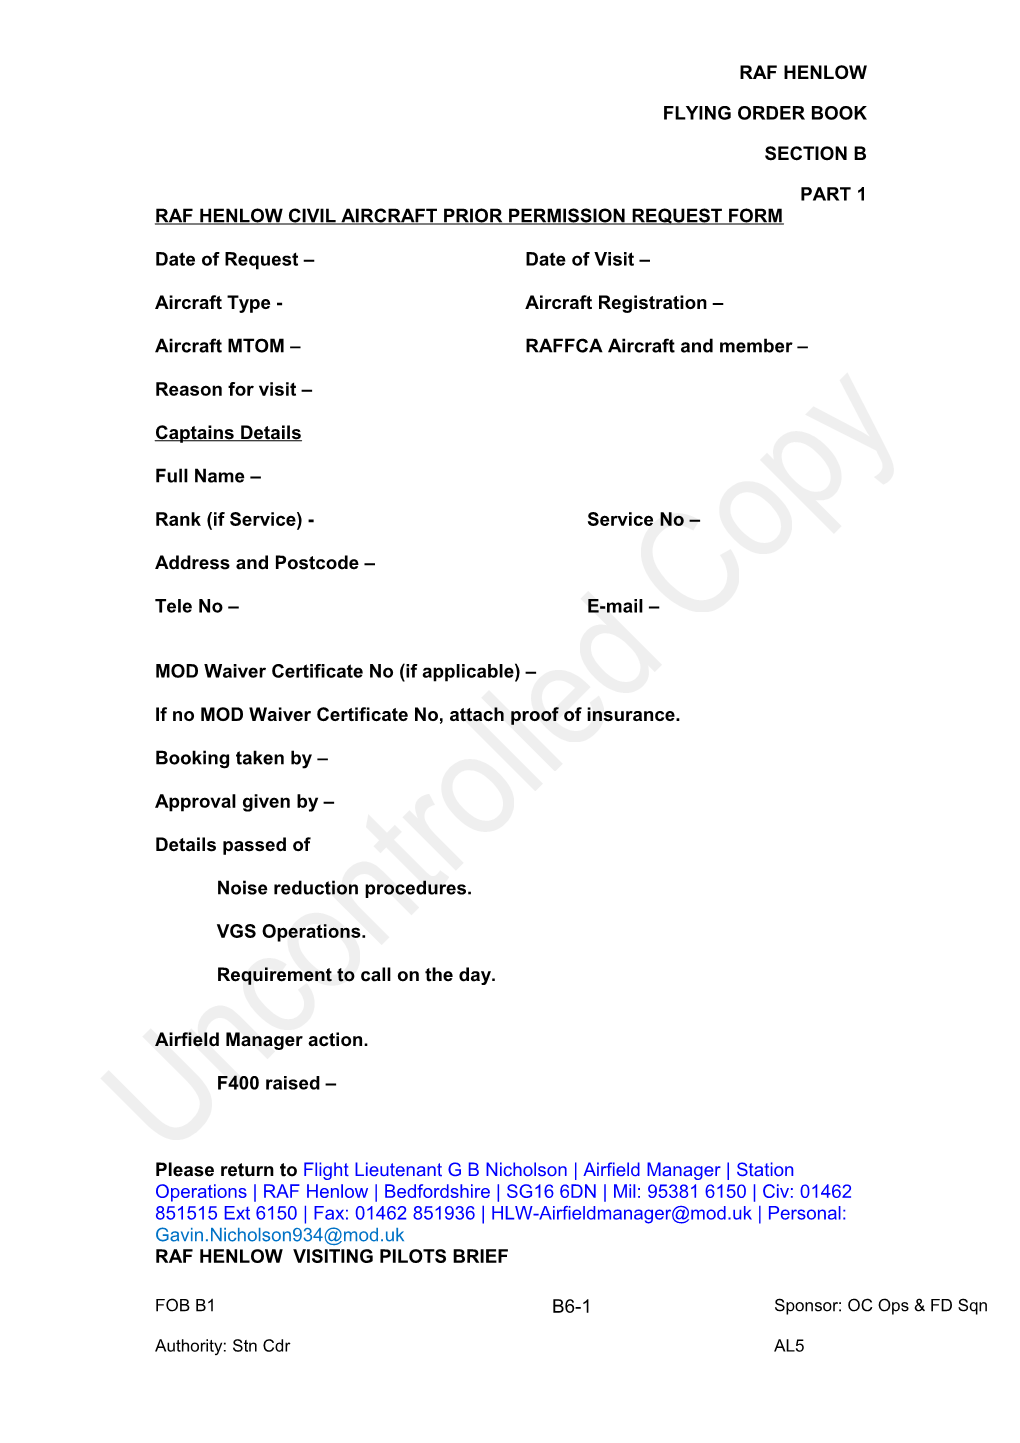 Raf Henlow Civil Aircraft Prior Permission Request Form